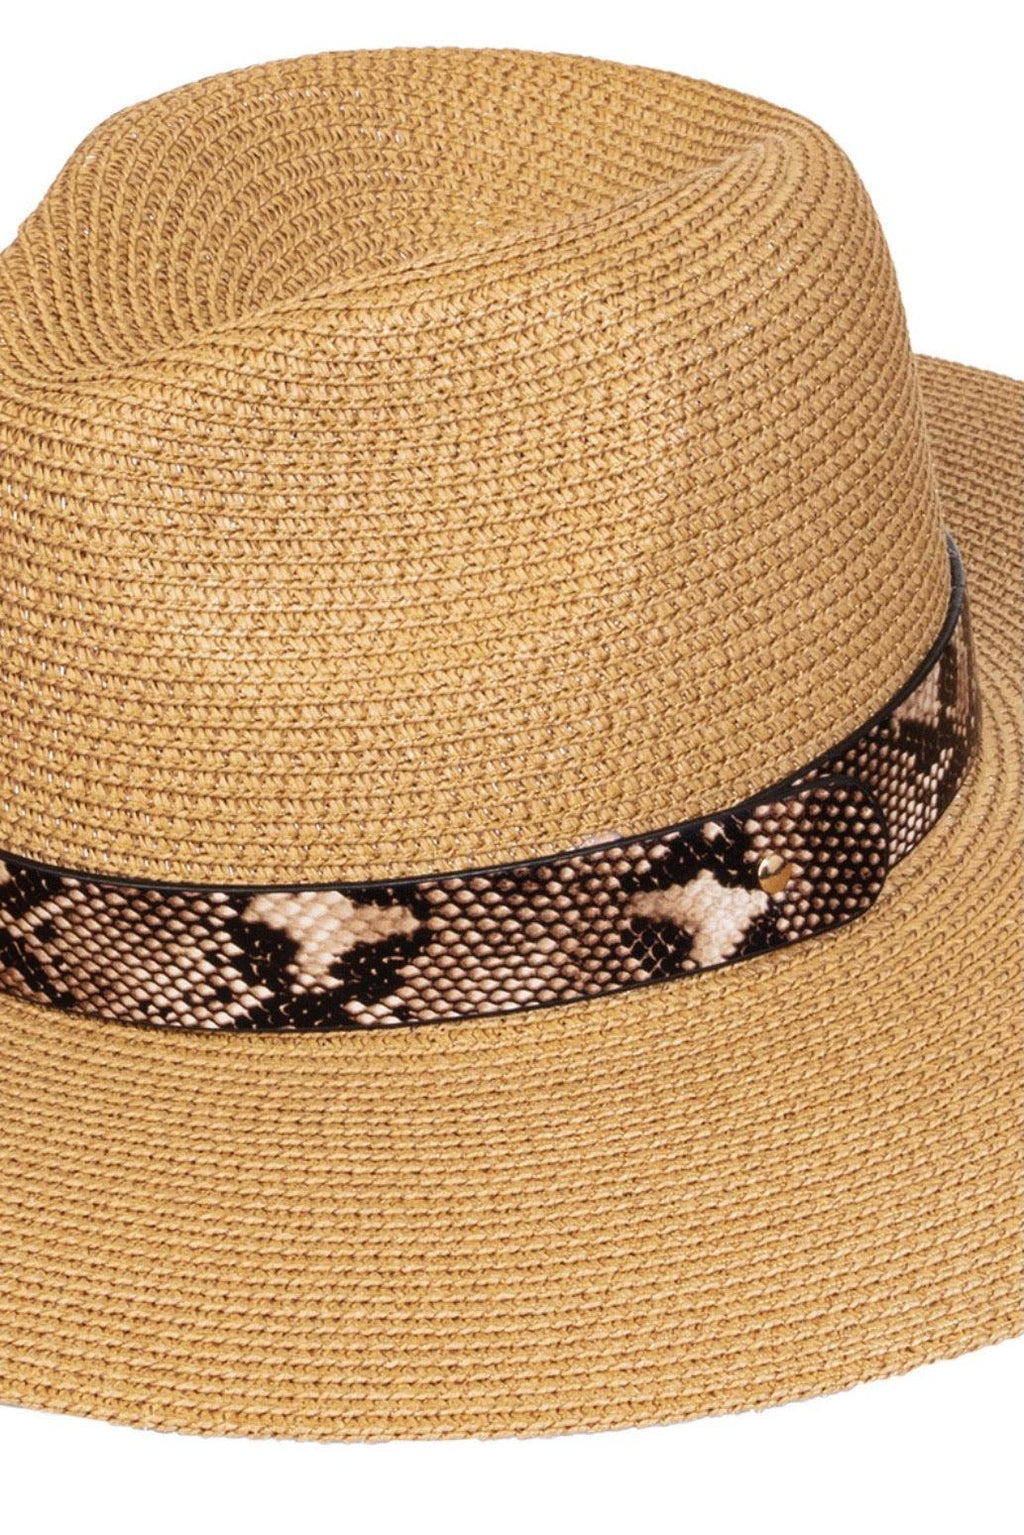 Izzy Snakeskin Banded Sun Hat - Tan - Pineapple Lain Boutique